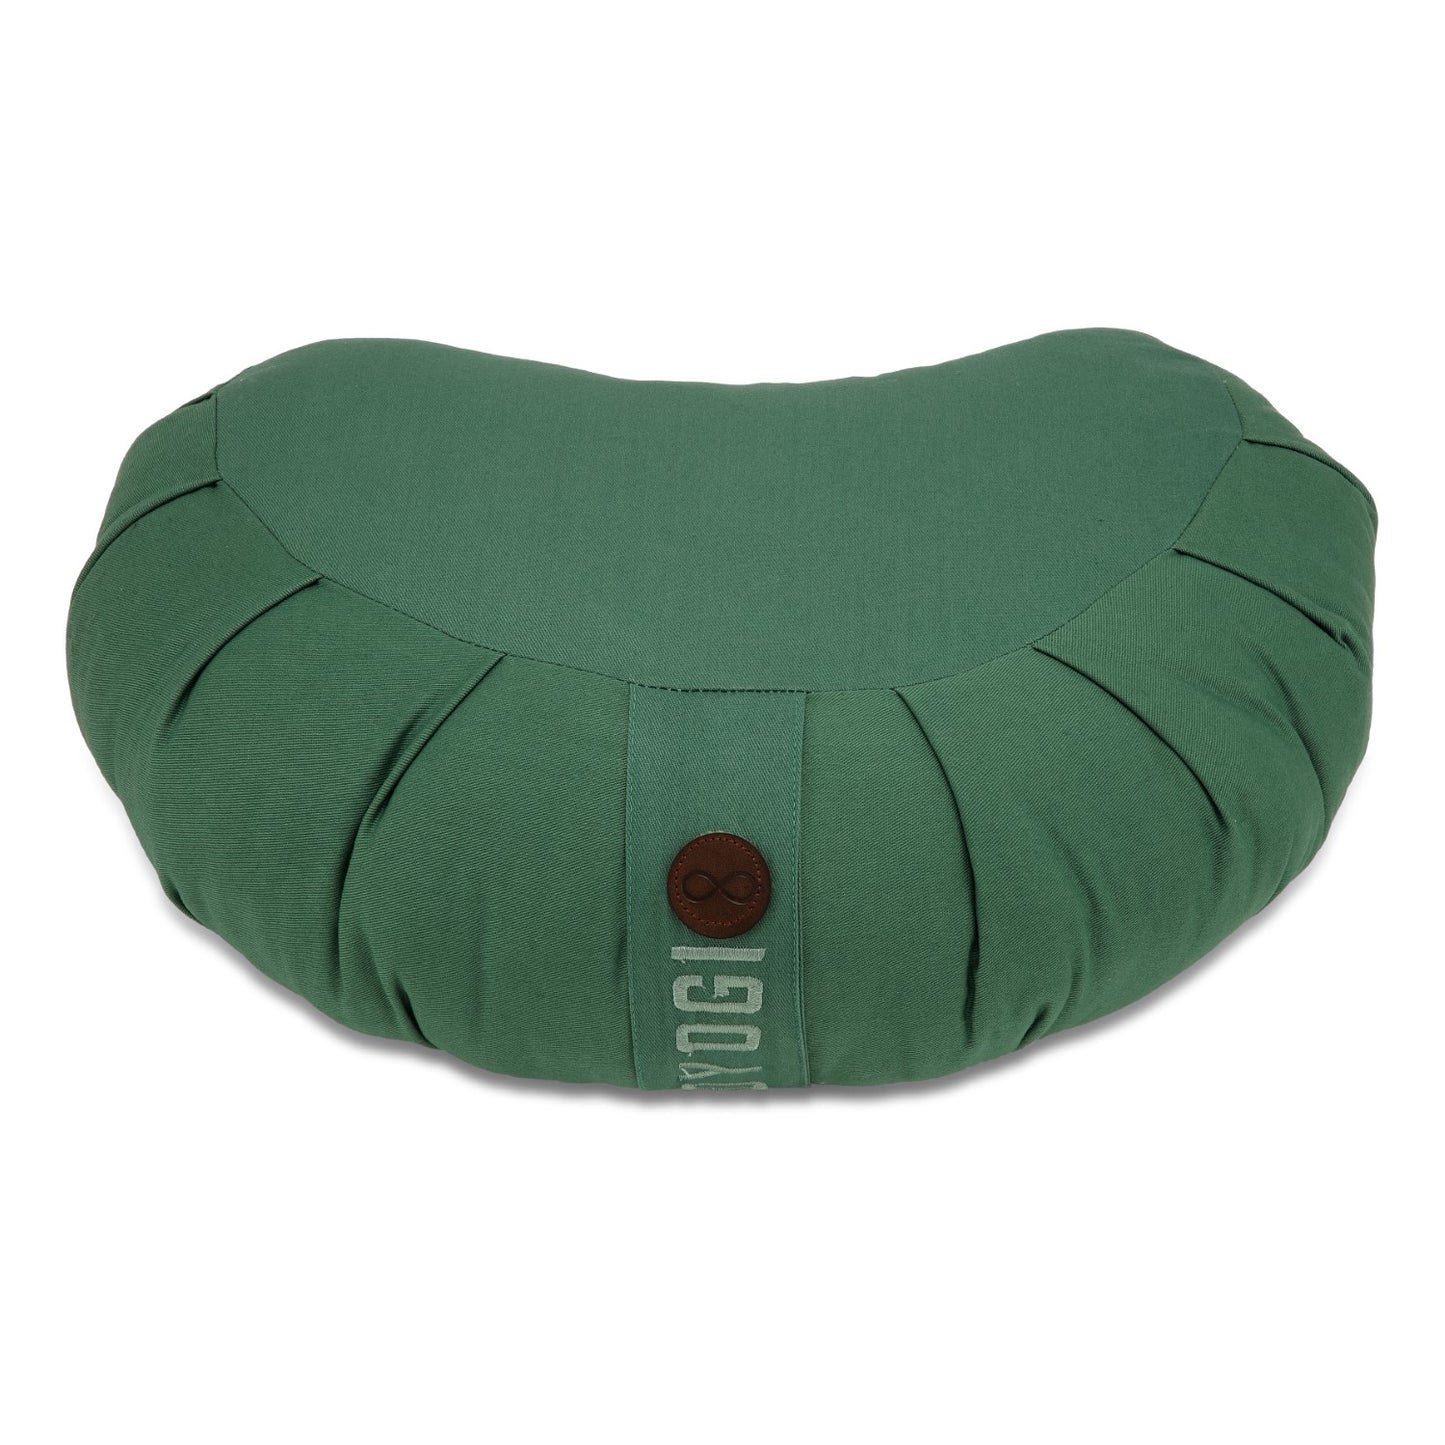 Calm Crescent Meditation Cushion - Green